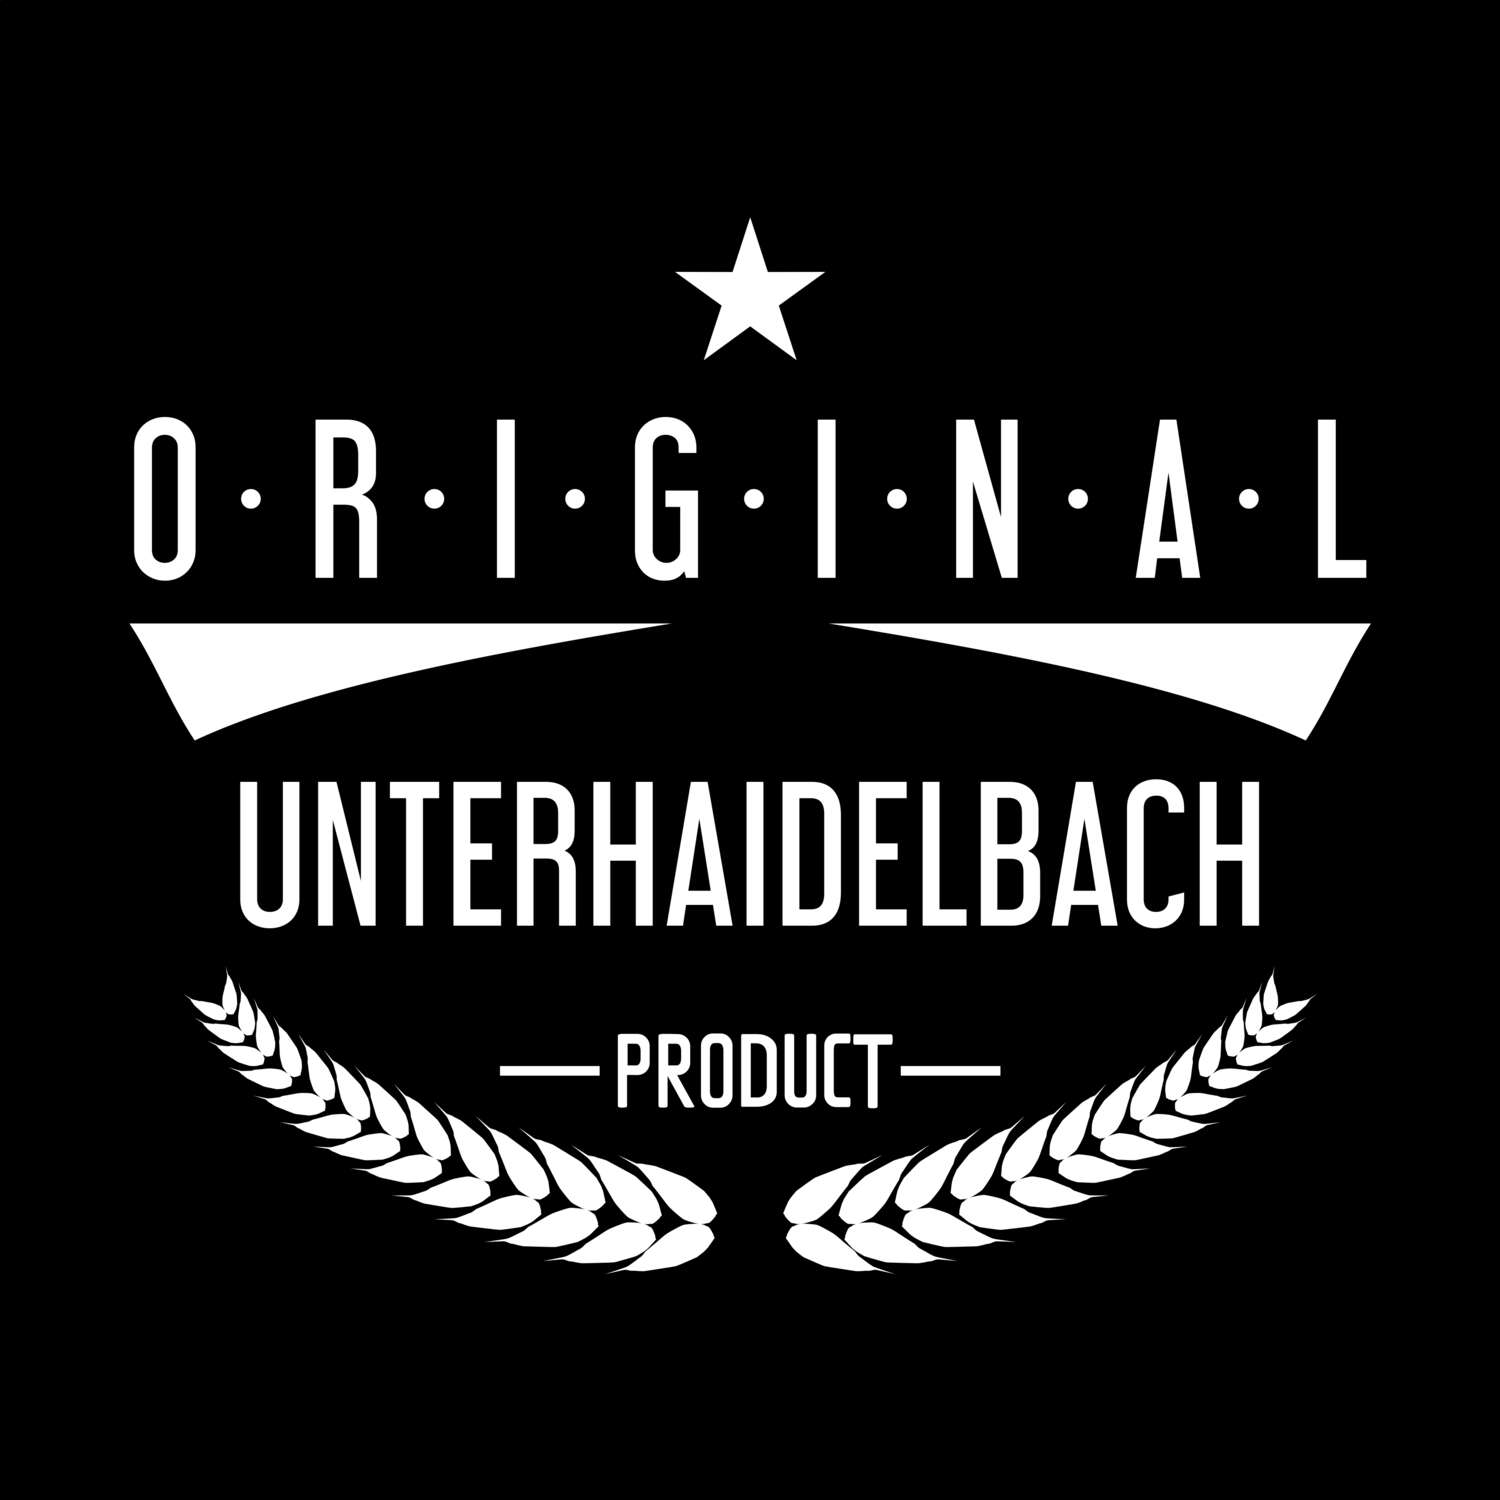 Unterhaidelbach T-Shirt »Original Product«